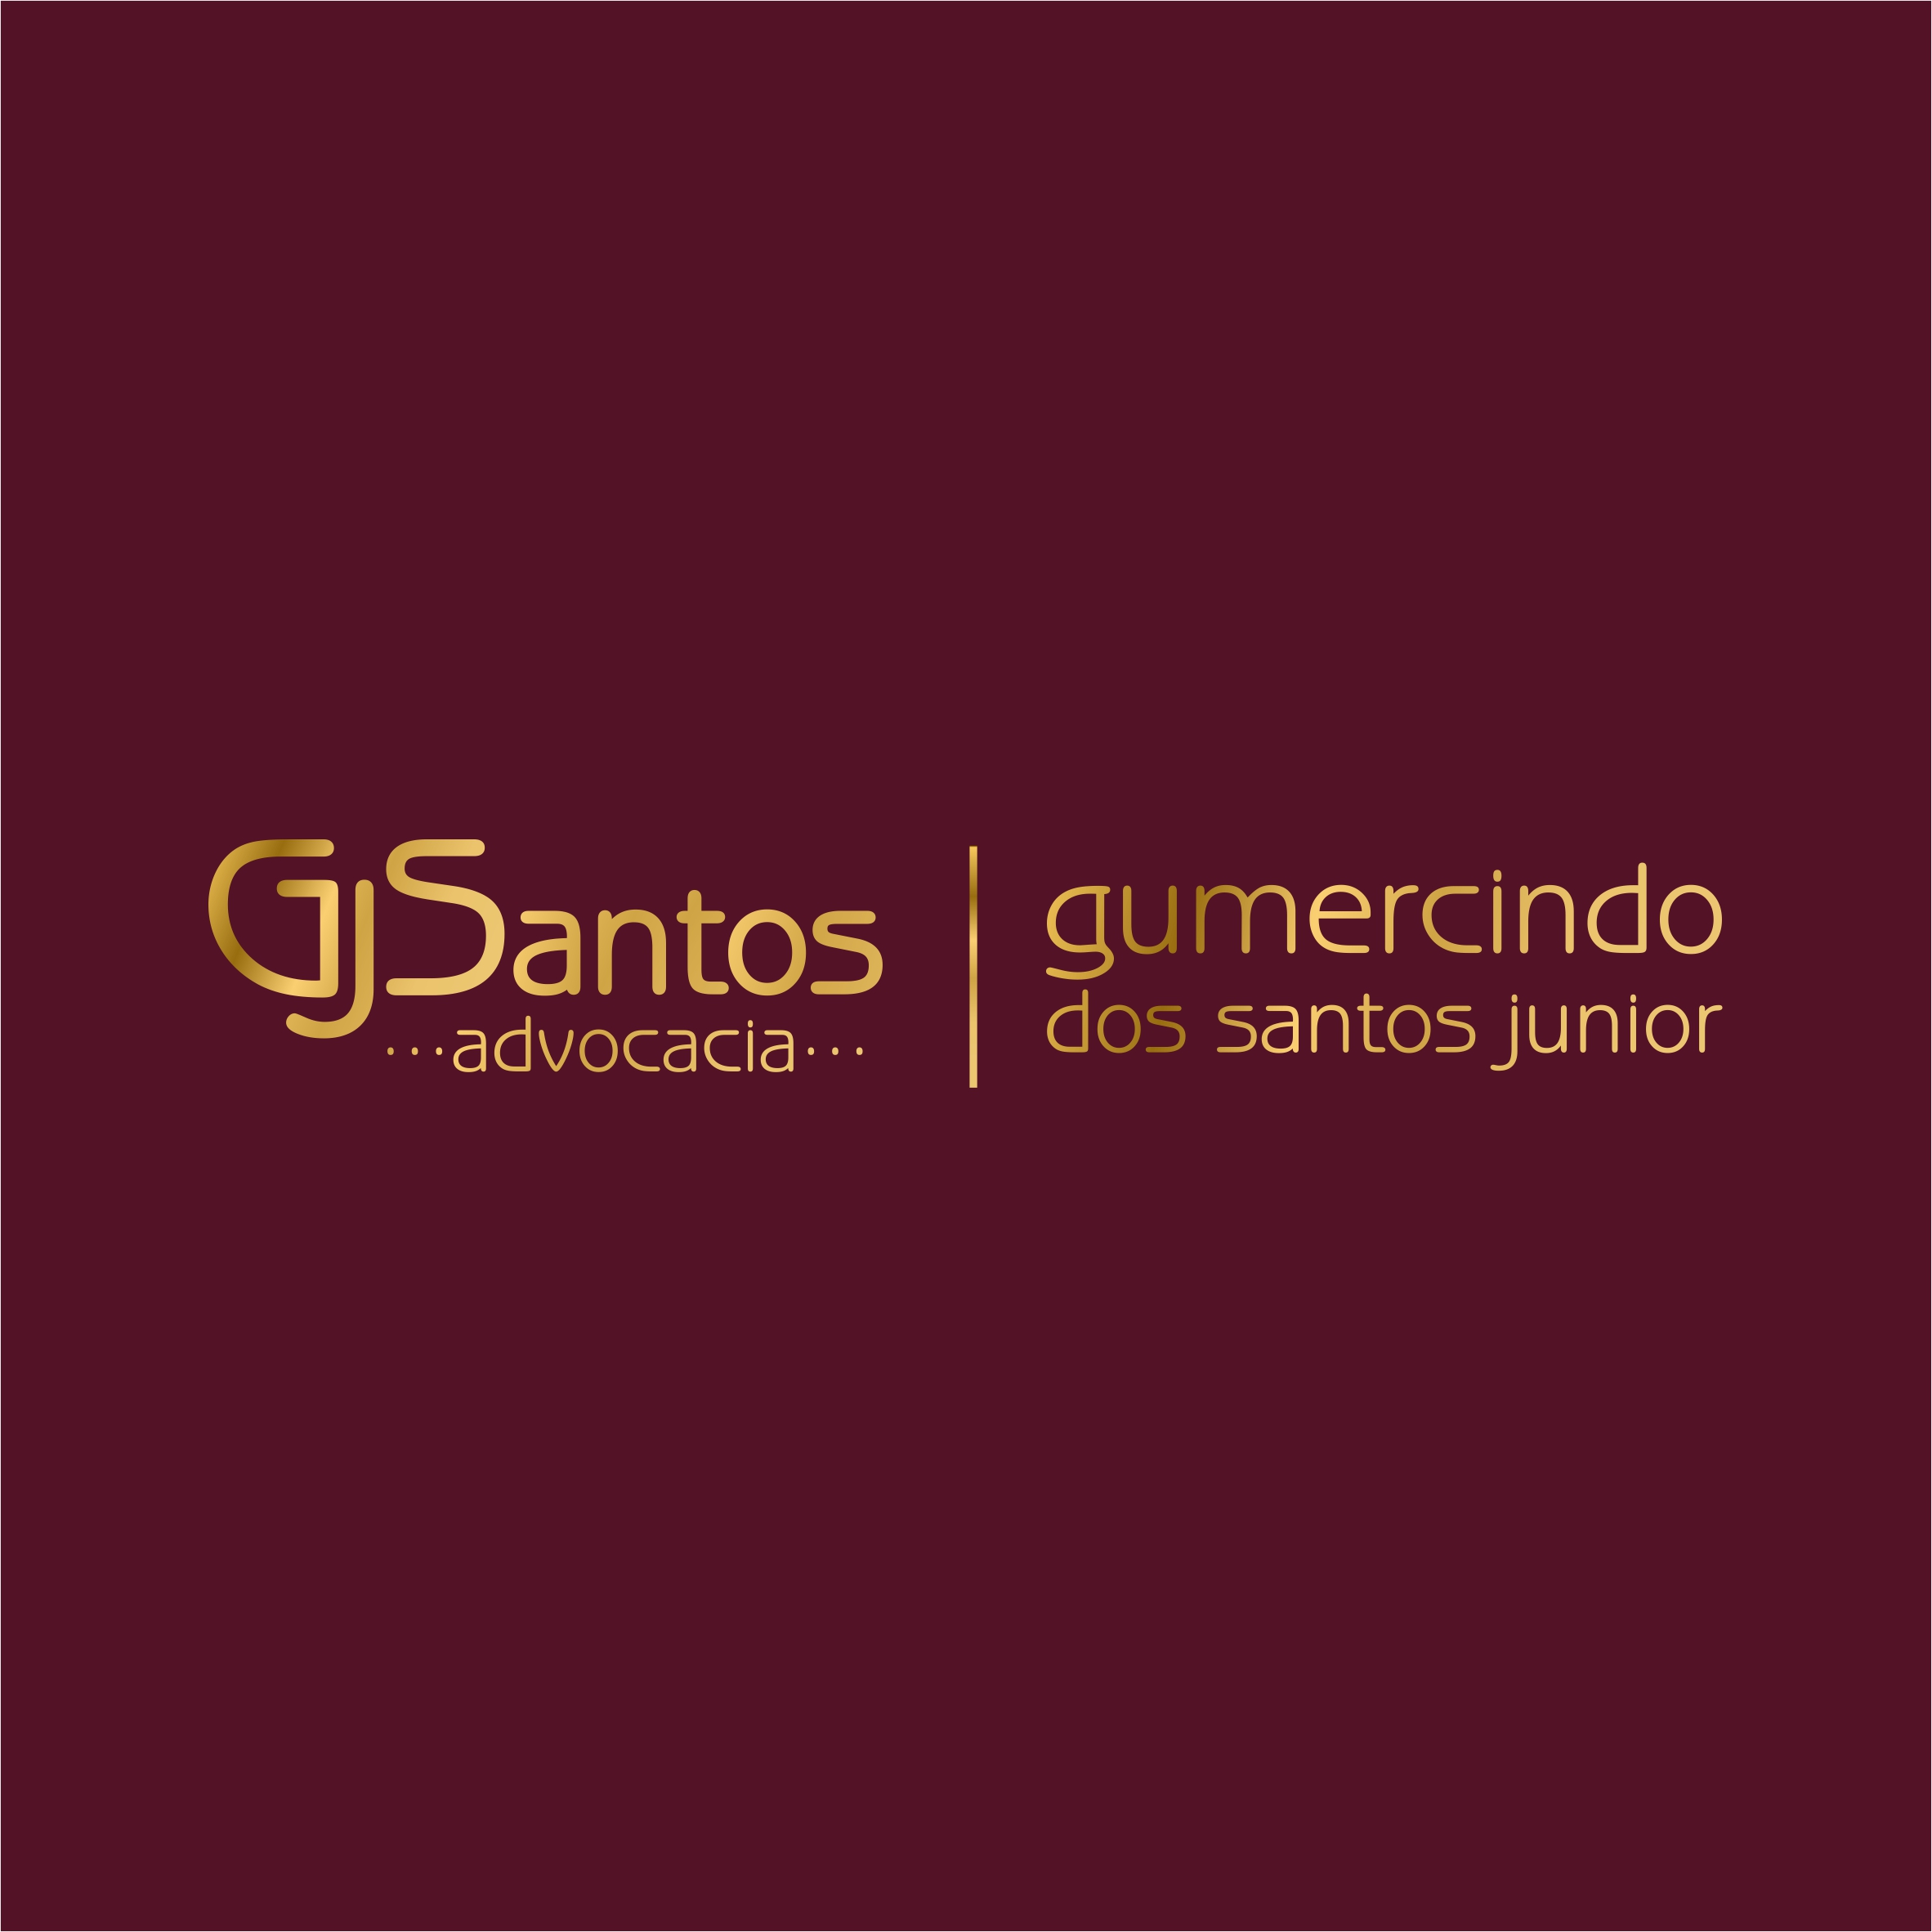 GUMERCINDO DOS SANTOS JUNIOR - Advogados - Santos, SP